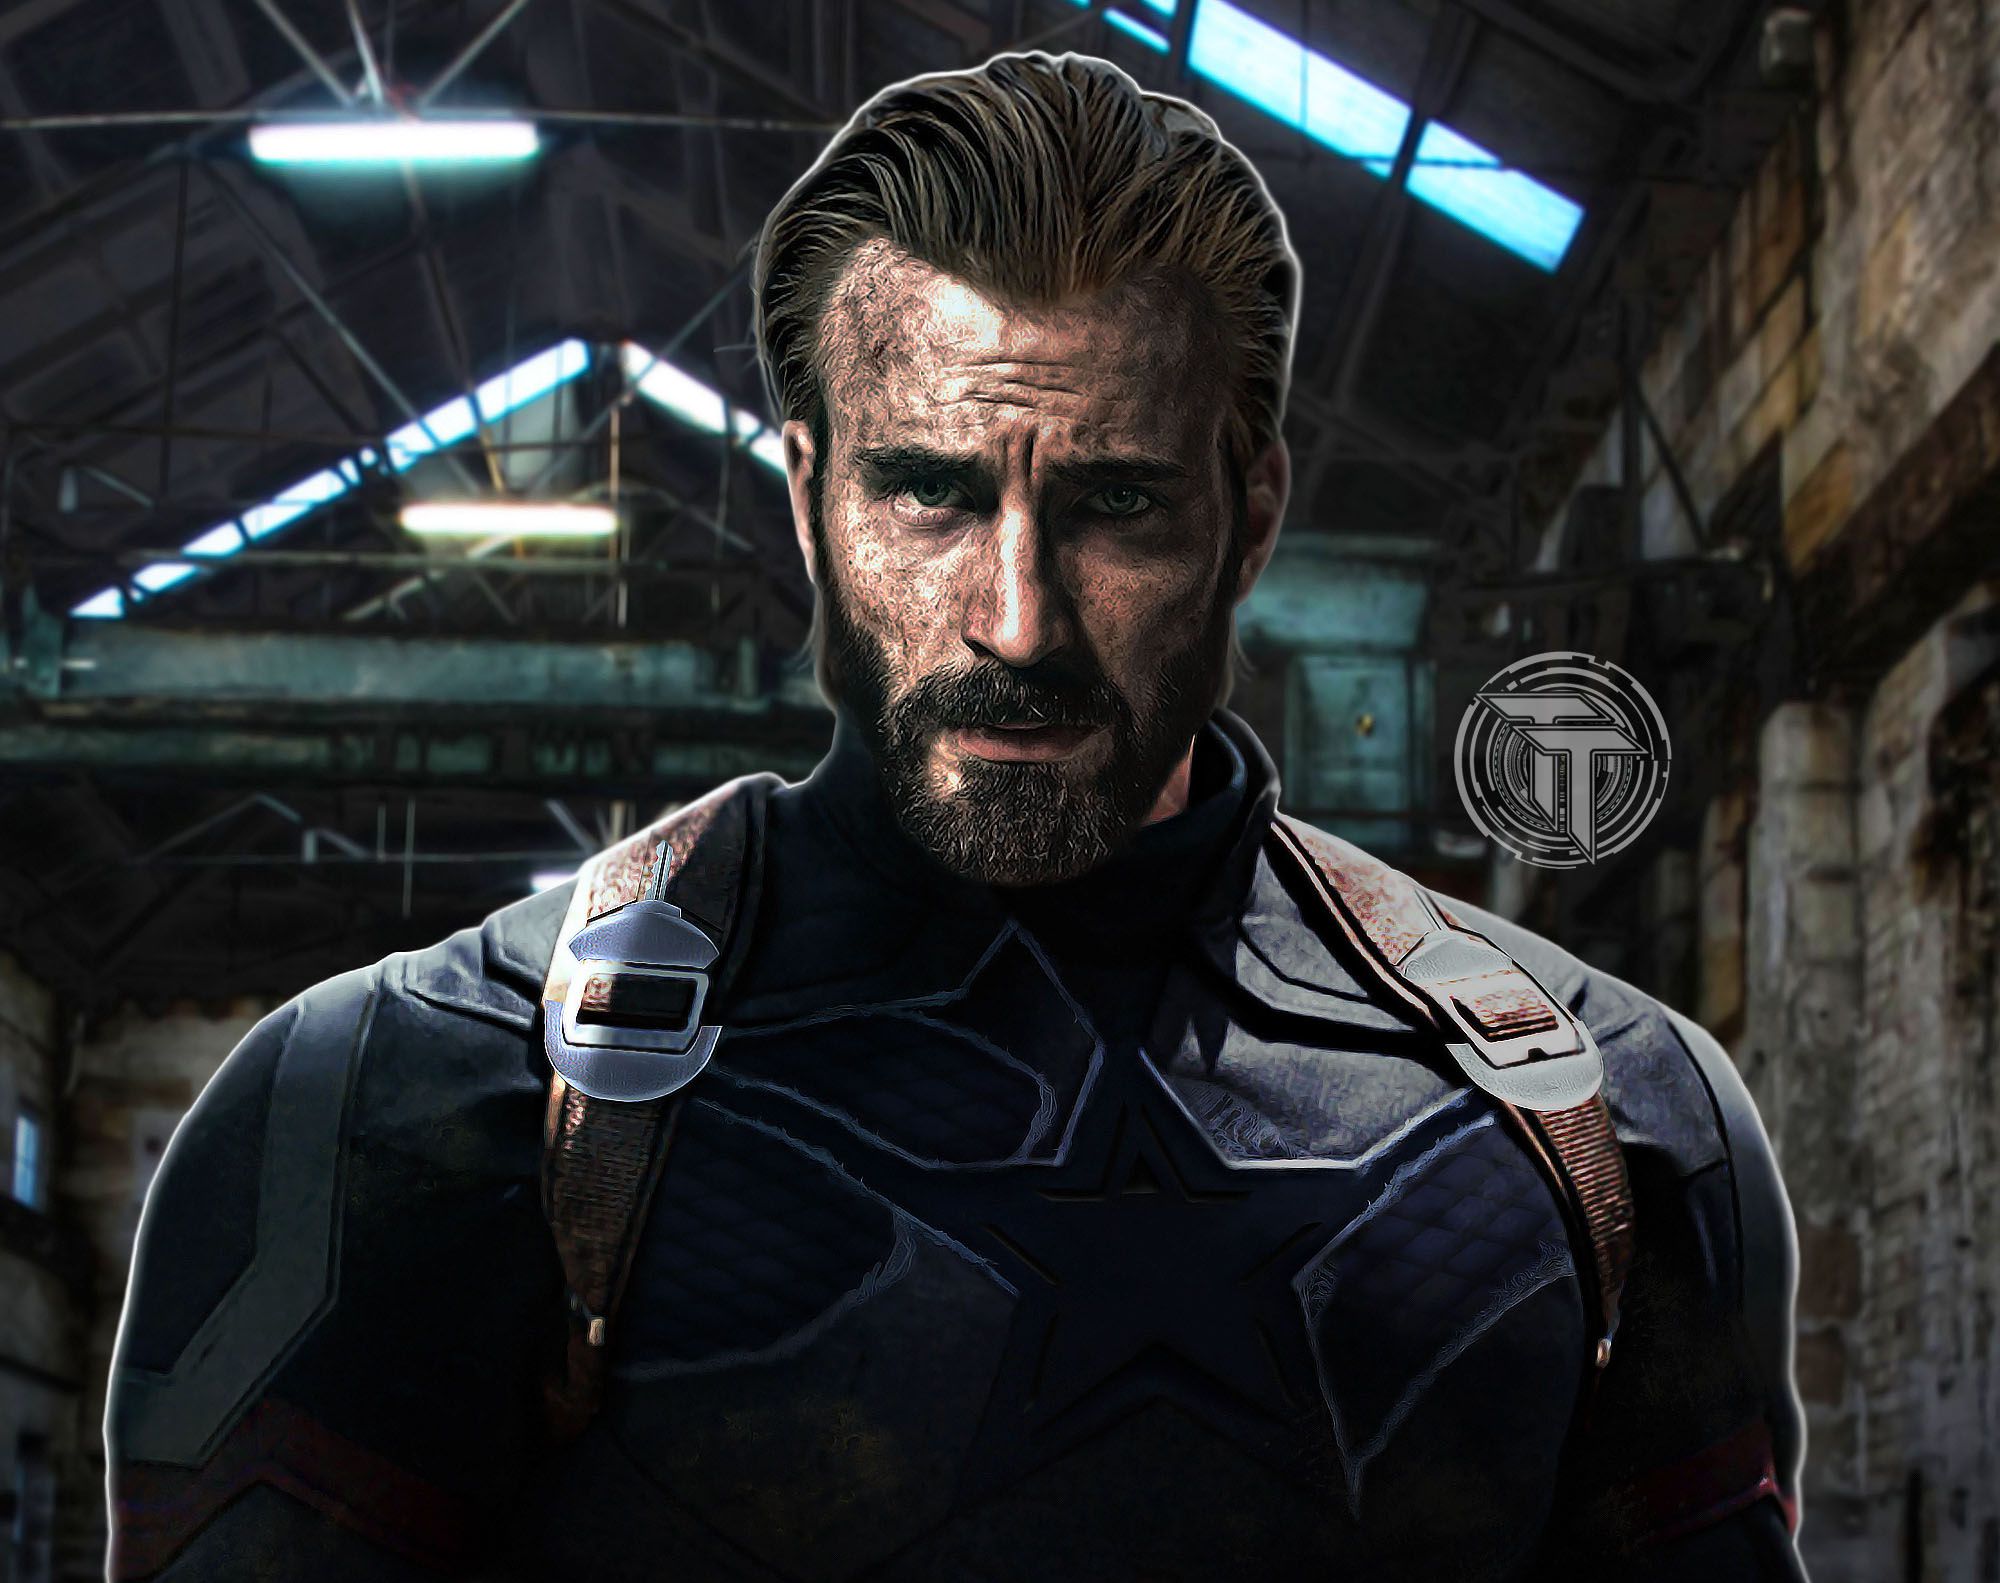 Captain America With Beard In Avengers Infinity War